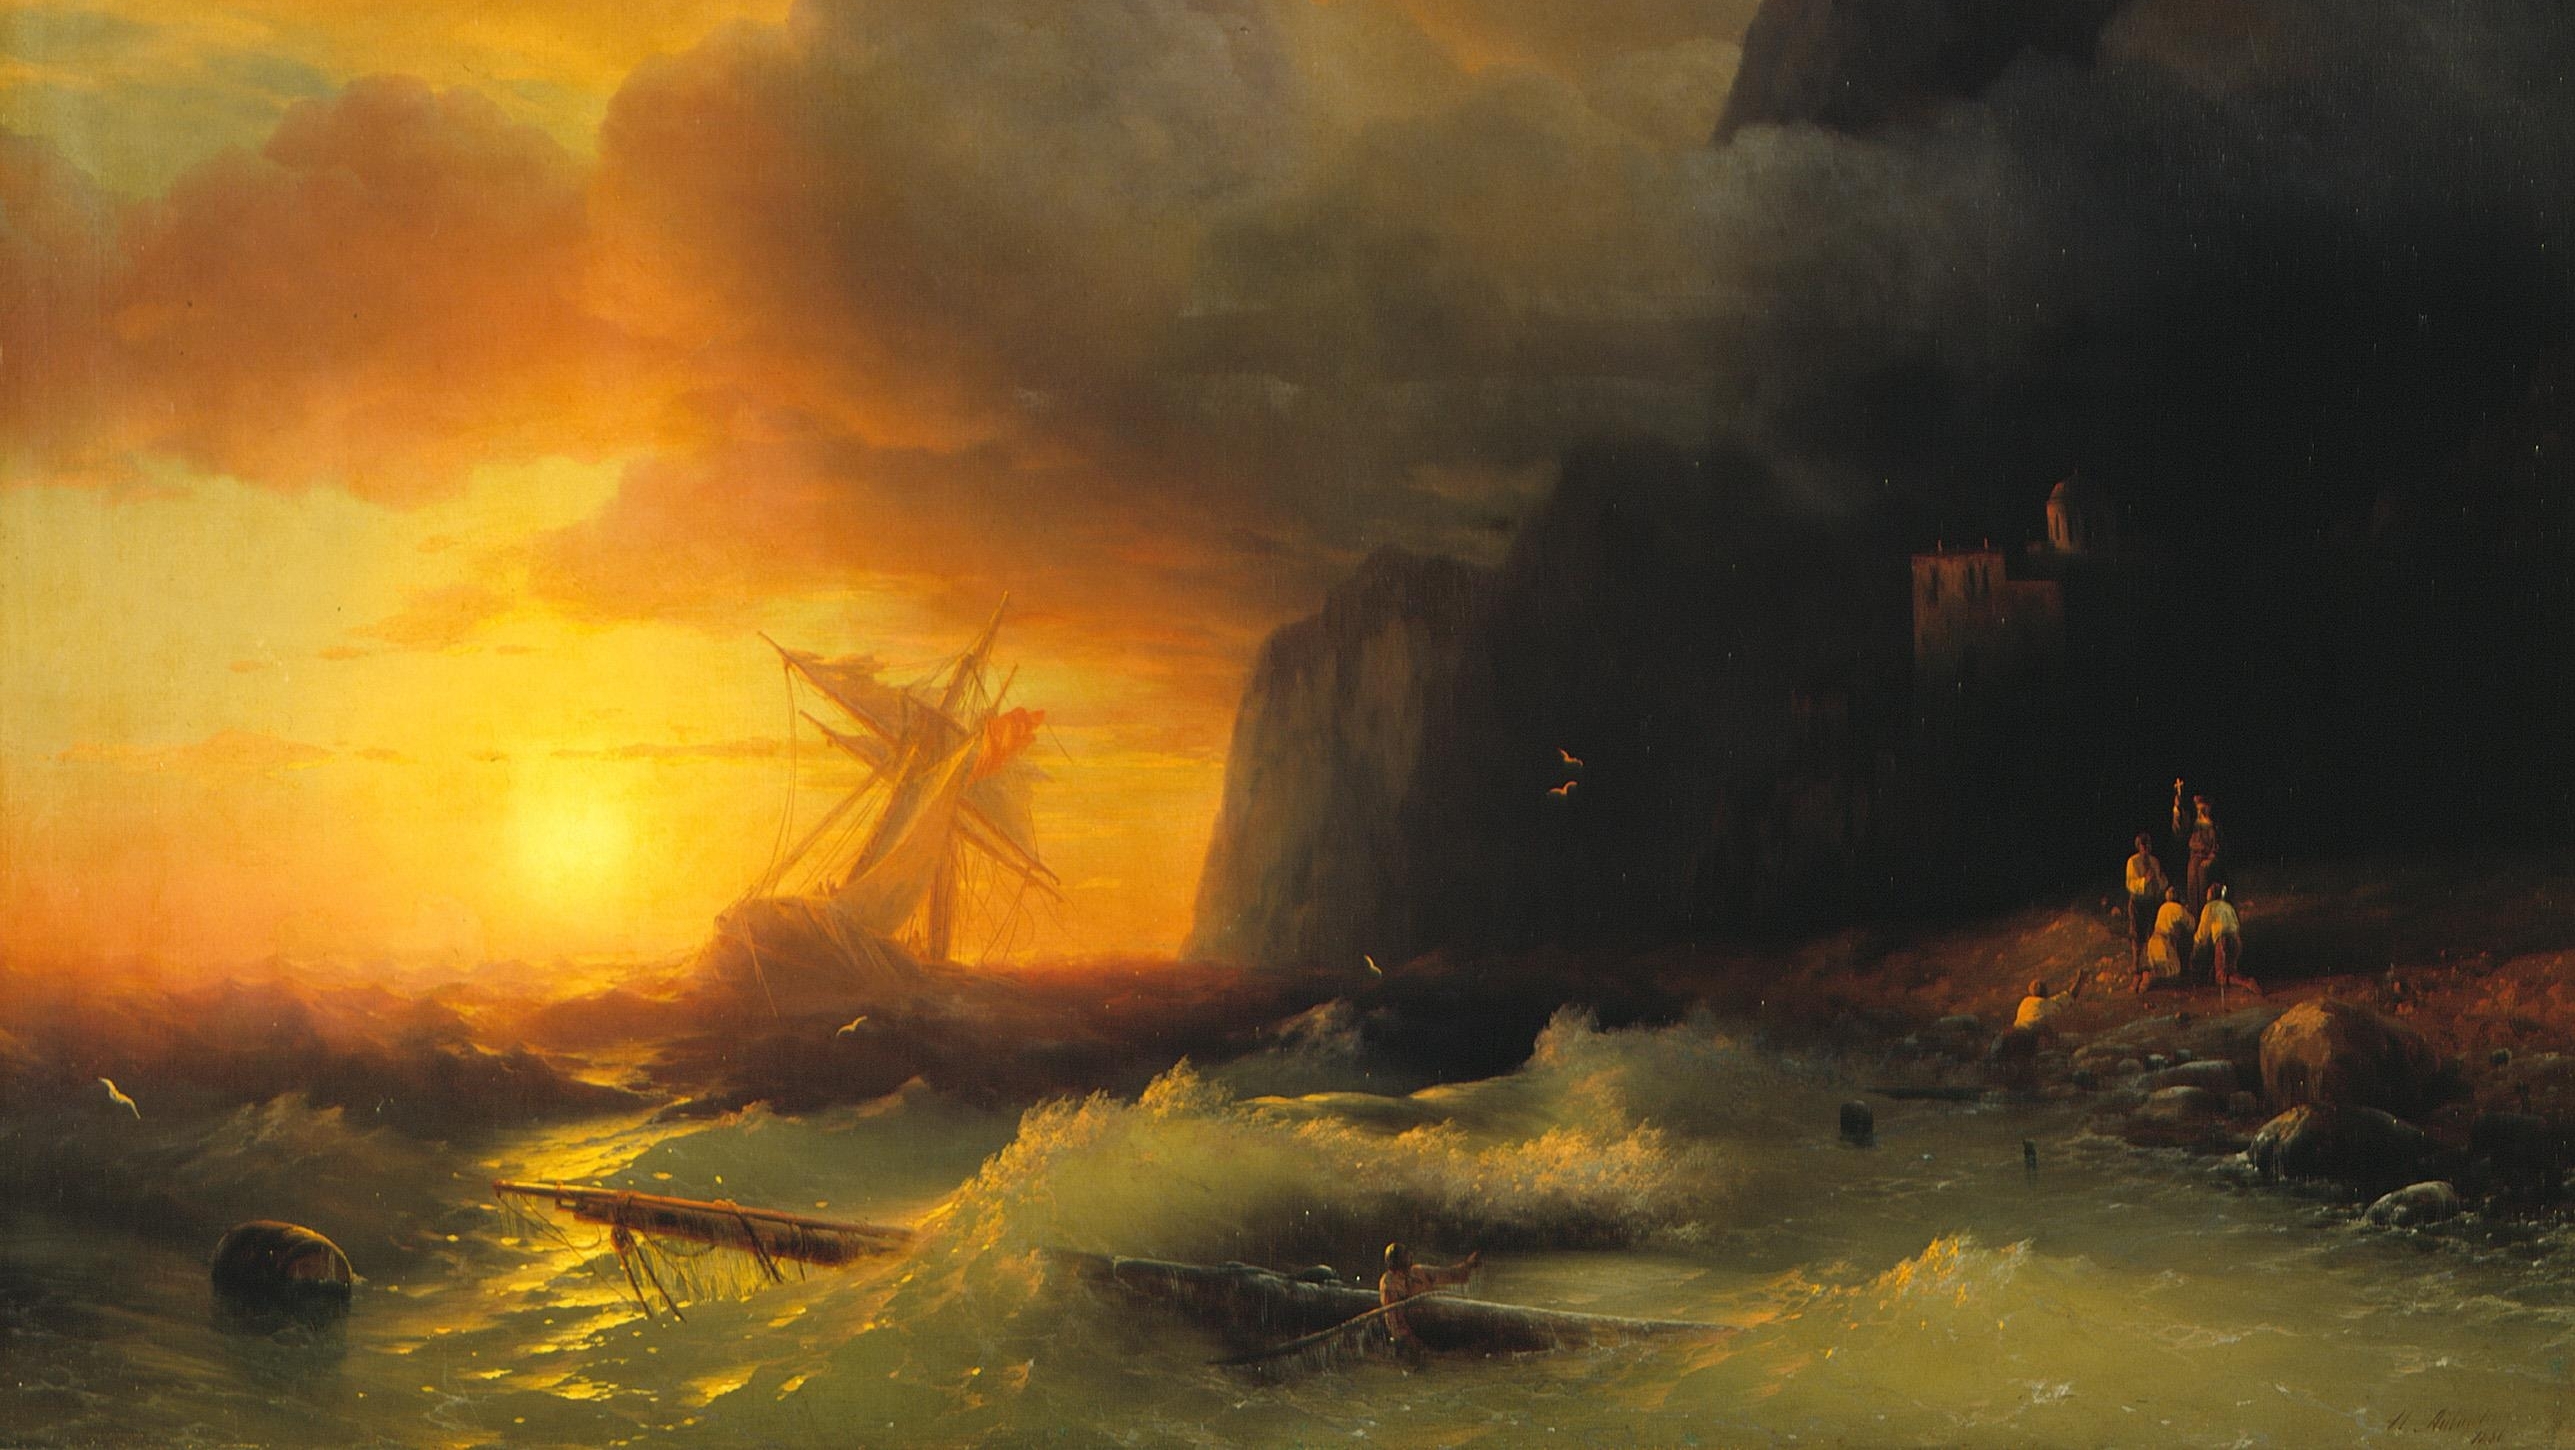 Ocean View Painting Maritime Horizon Sun Rays Mist Shipwreck Waves Classic Art 2575x1450